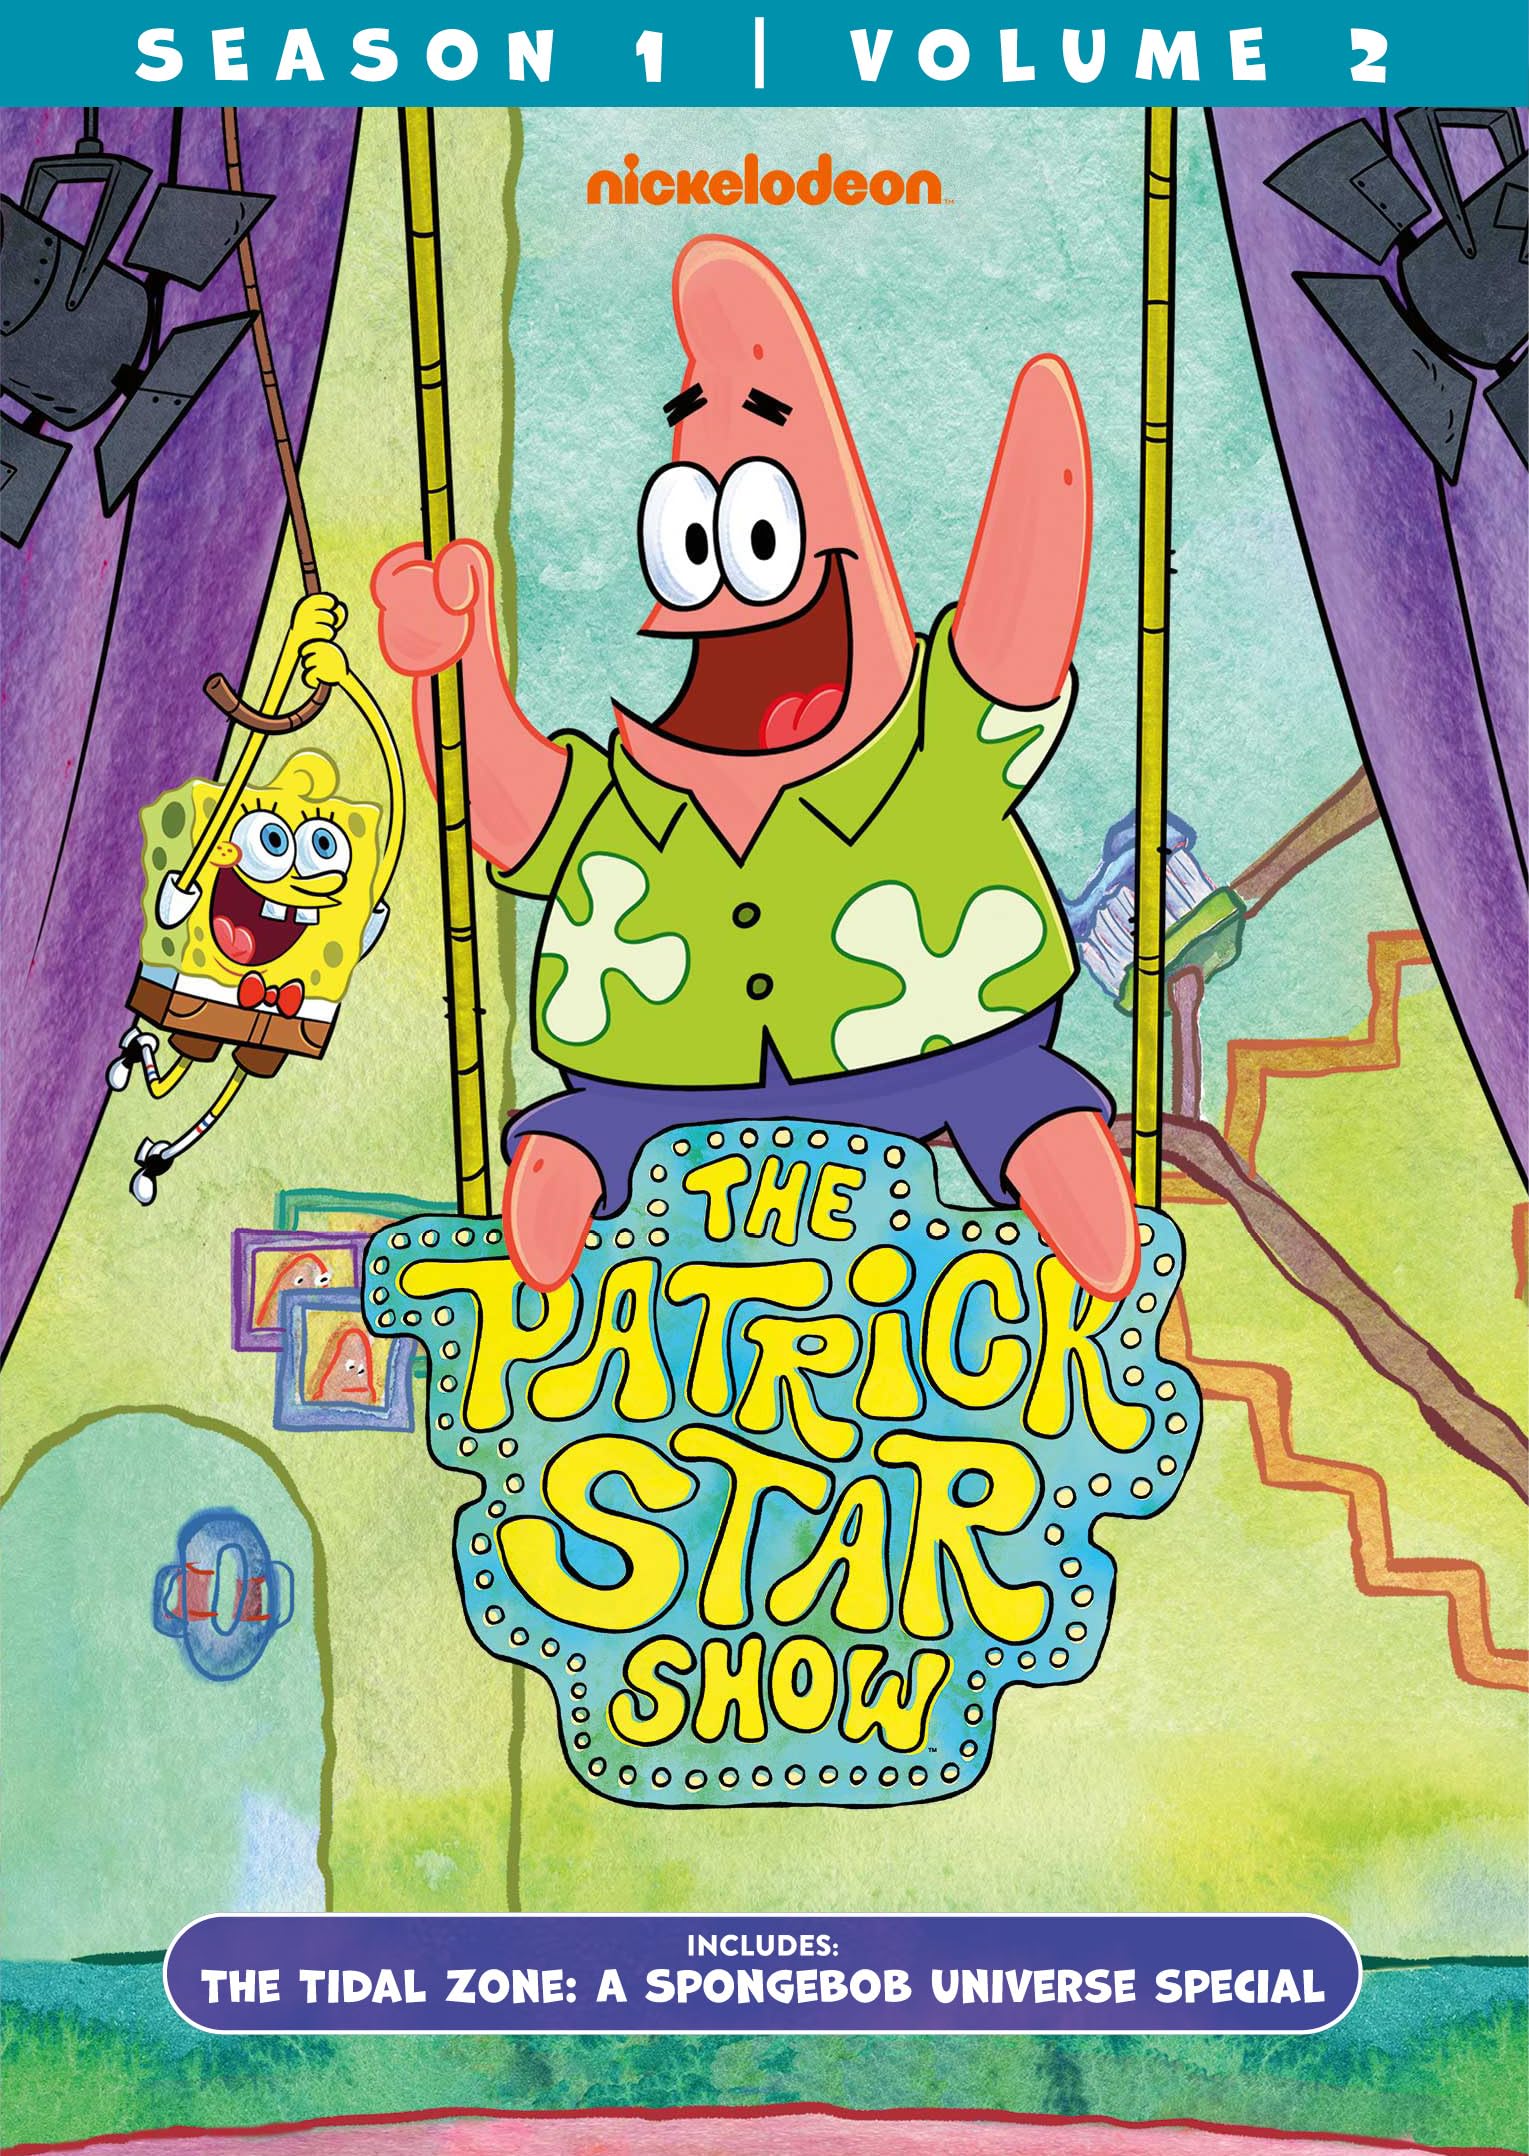 SpongeBob SquarePants ULTIMATES! Patrick Star